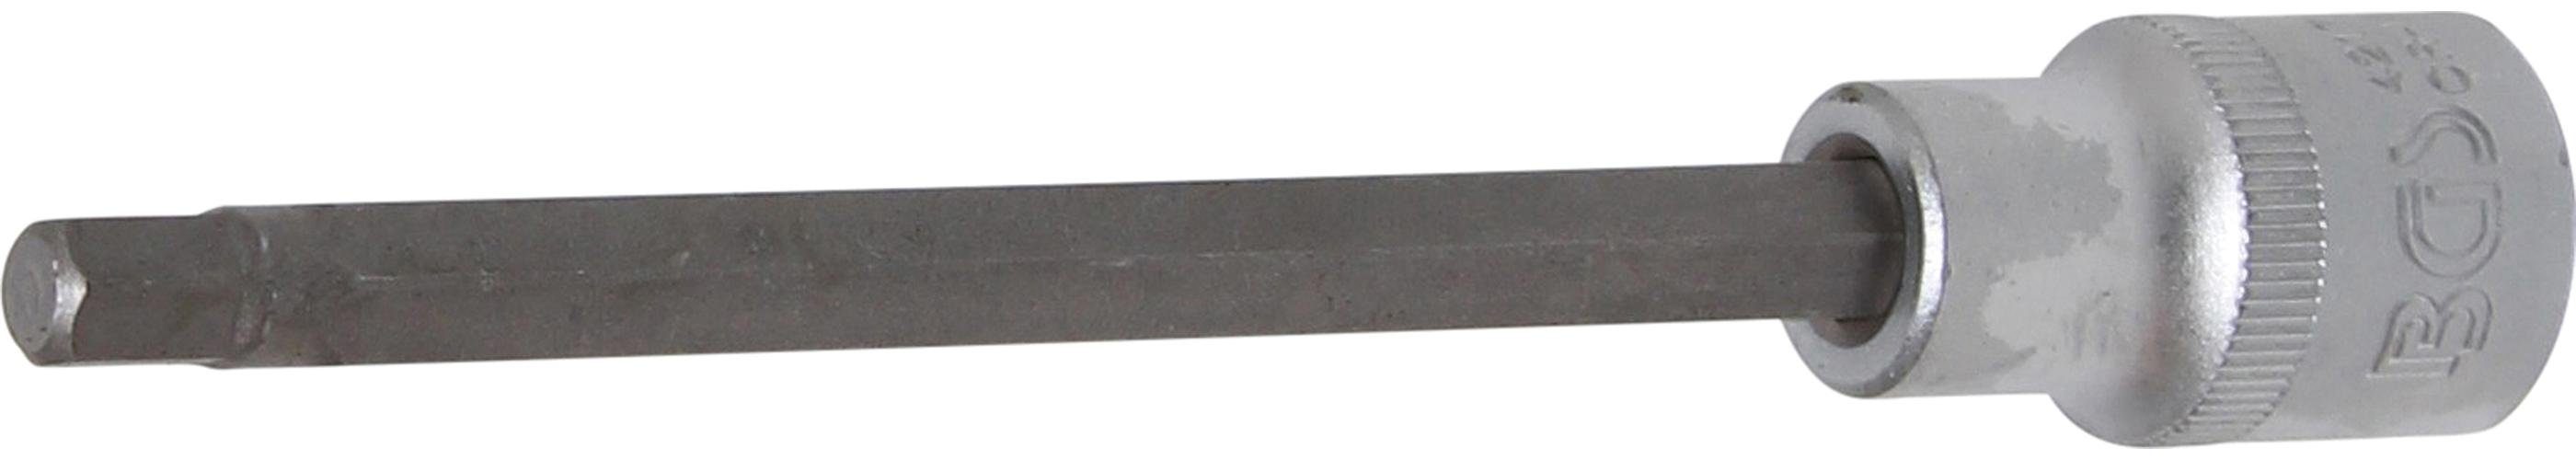 Länge Innenvierkant Sechskant-Bit 7 (1/2), 12,5 140 Antrieb mm Bit-Einsatz, BGS mm, technic mm Innensechskant